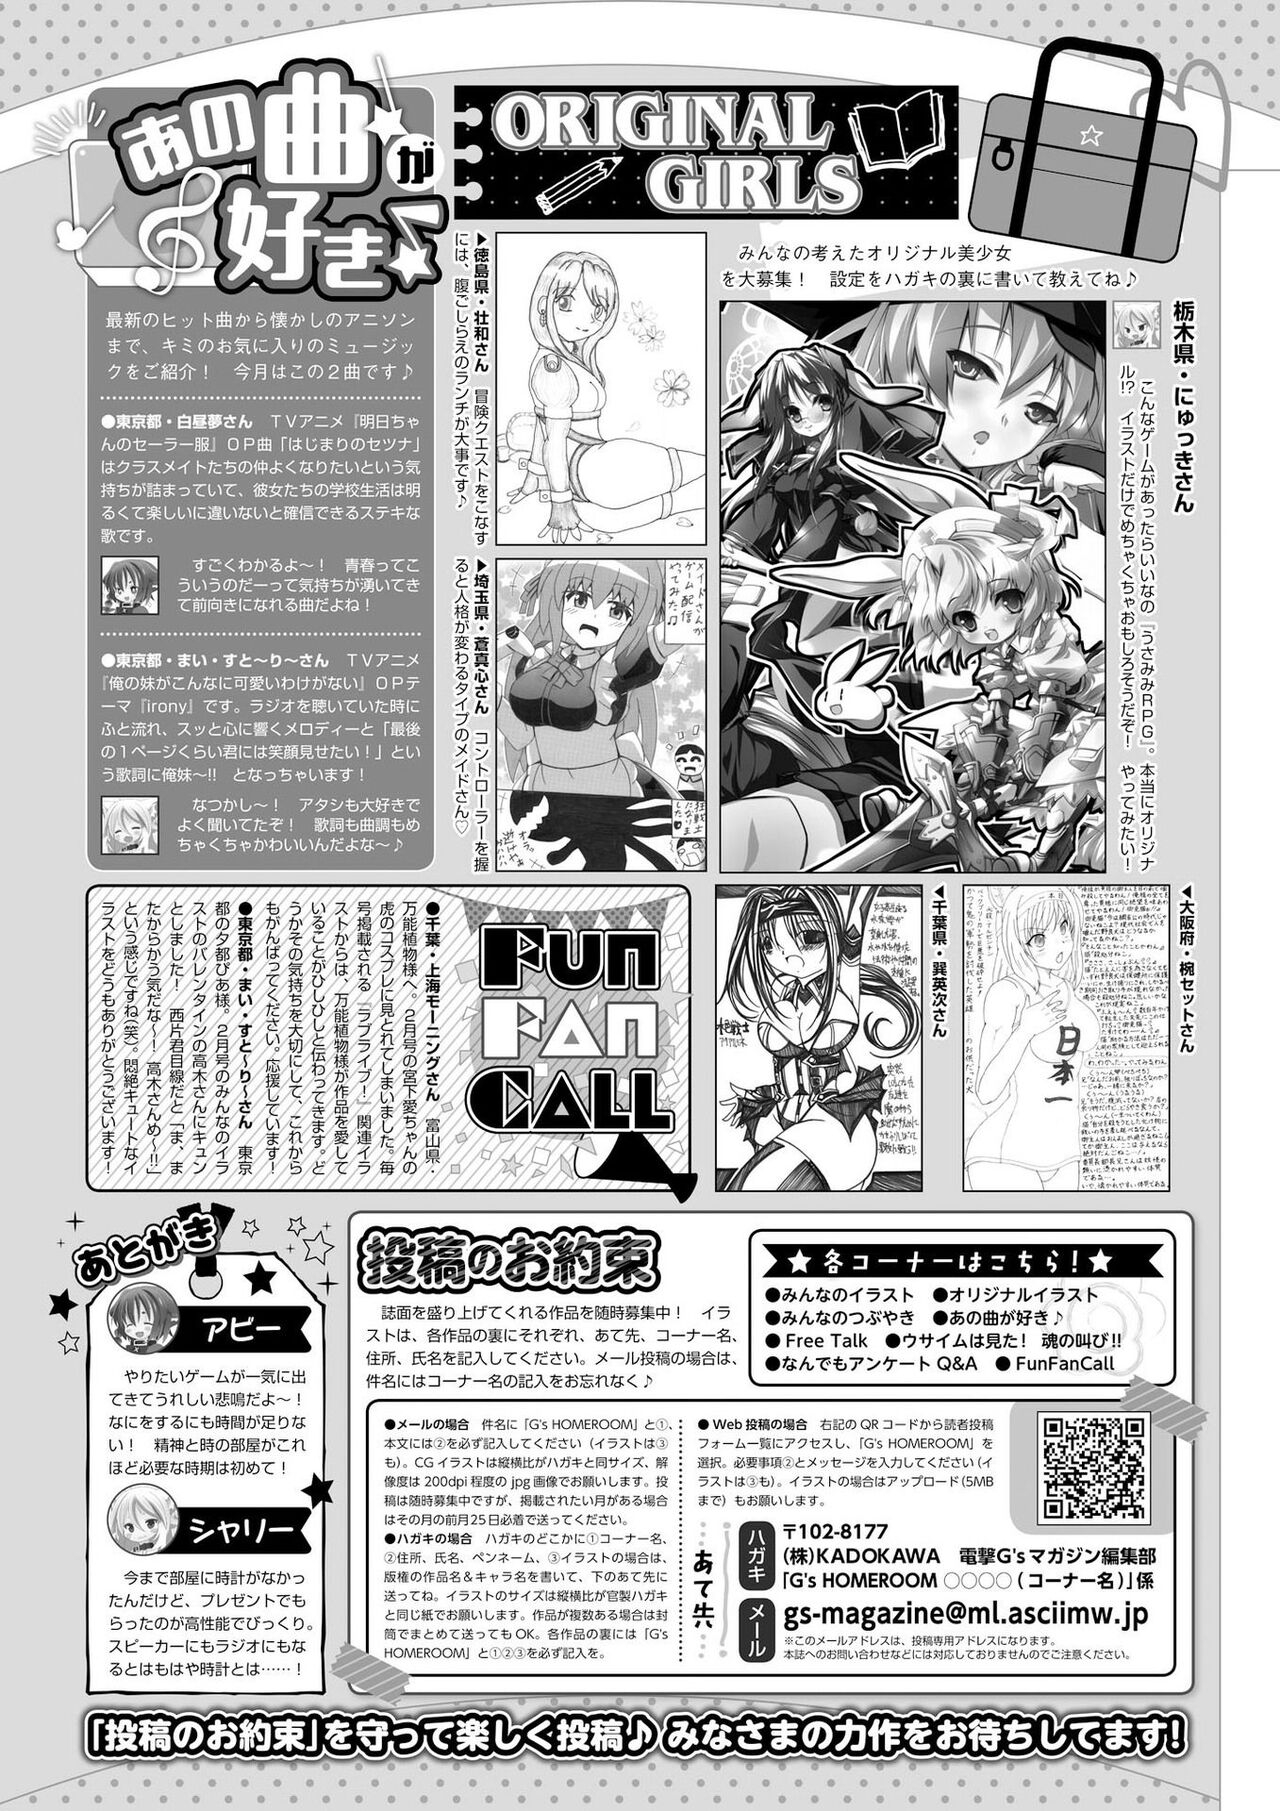 Dengeki G's Magazine #297 - April 2022 98